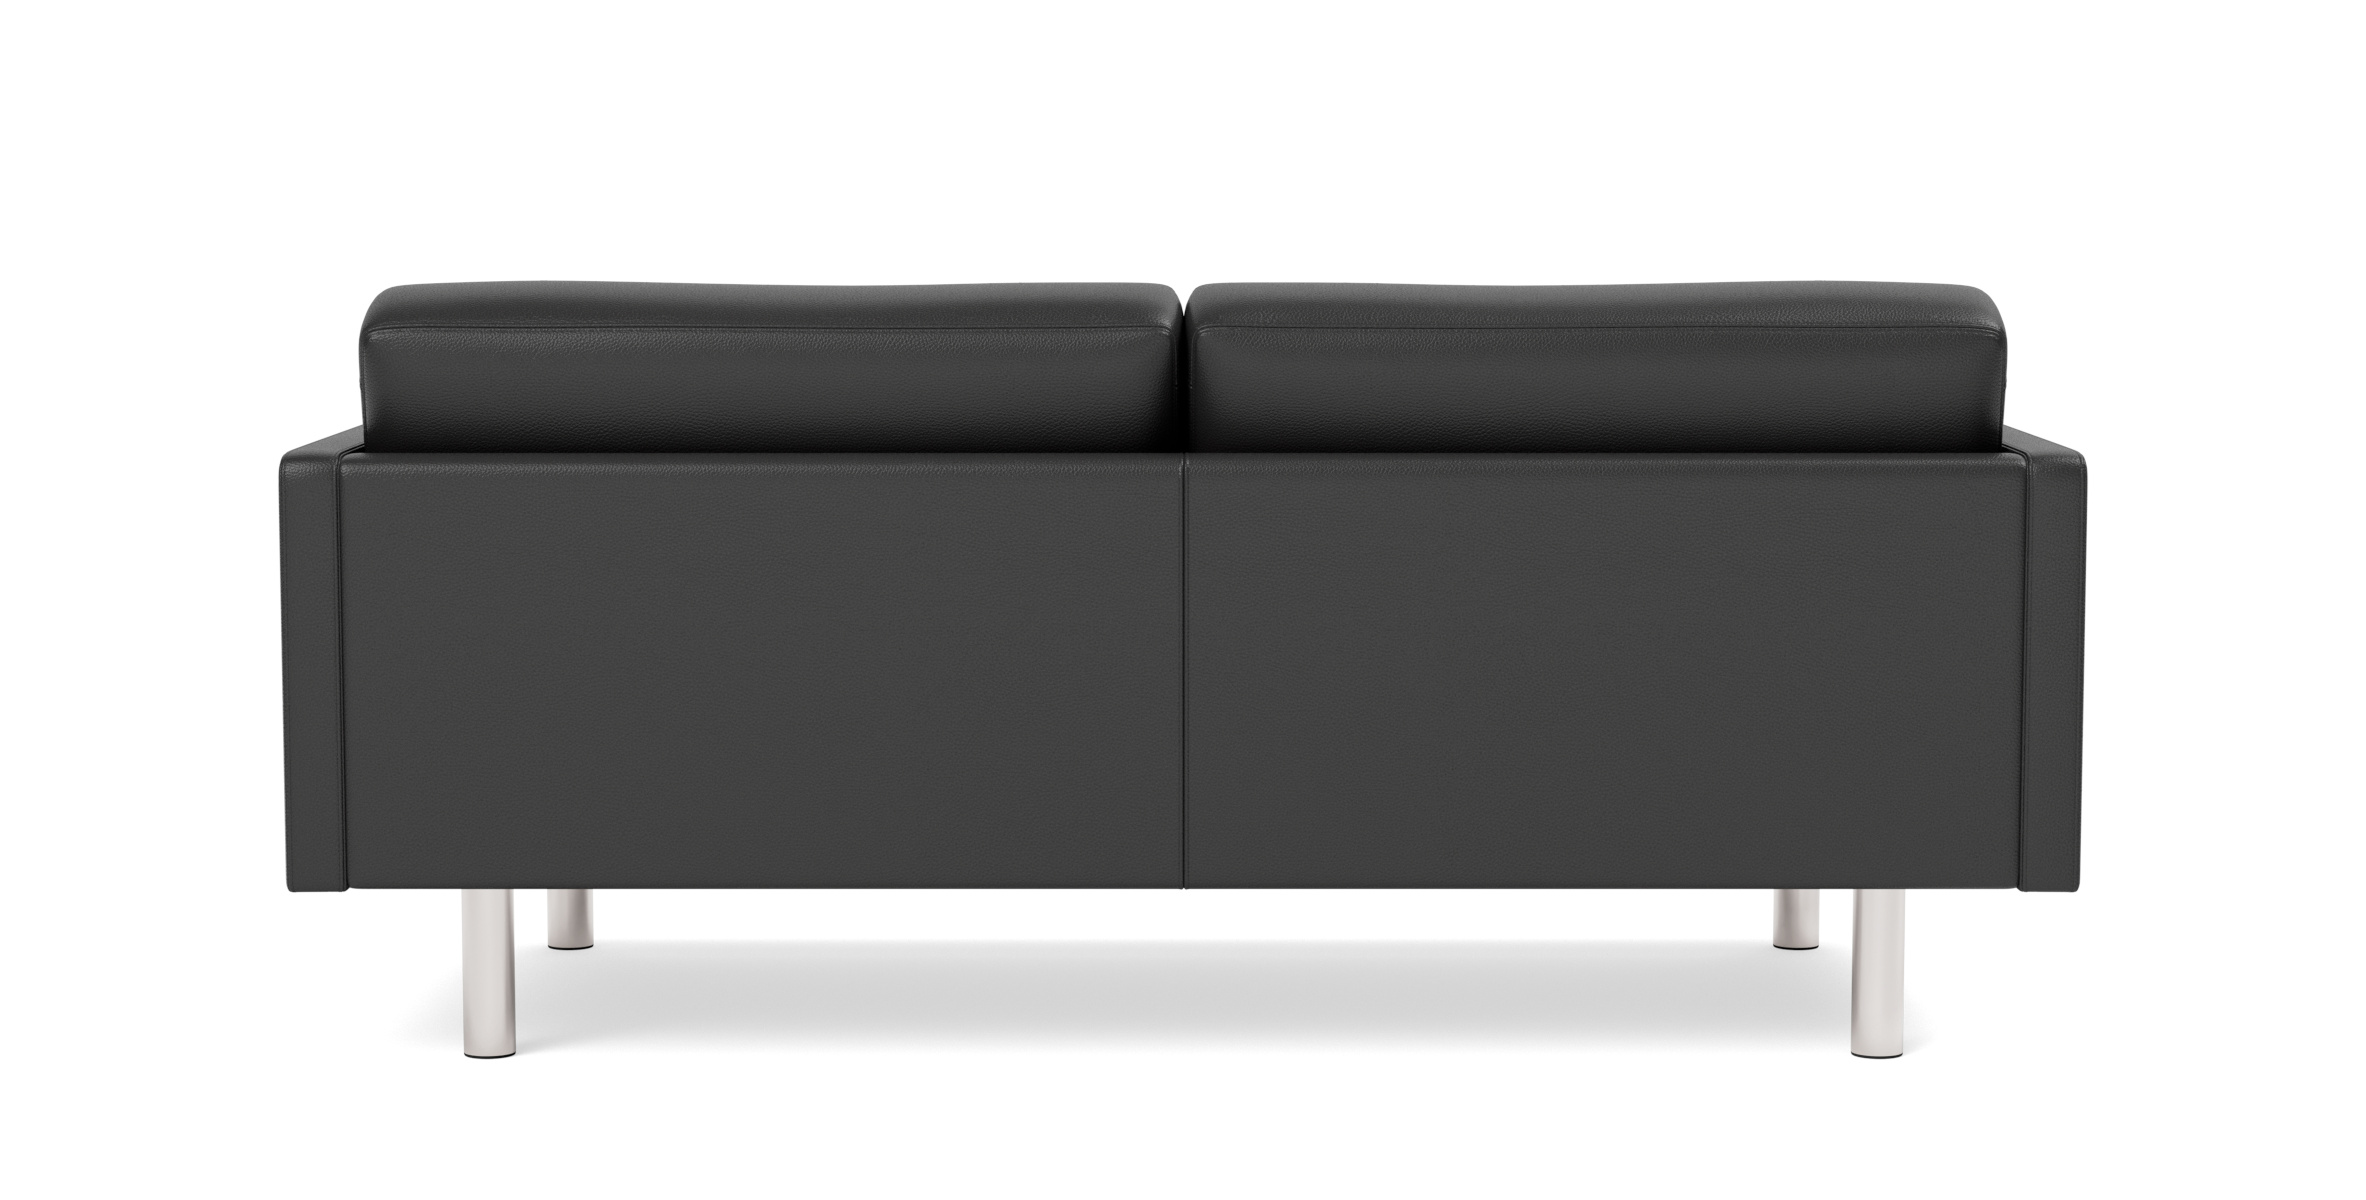 EJ220 Sofa 2-Sitzer, 76 cm, eiche geseift / erik, 9998 broken grey